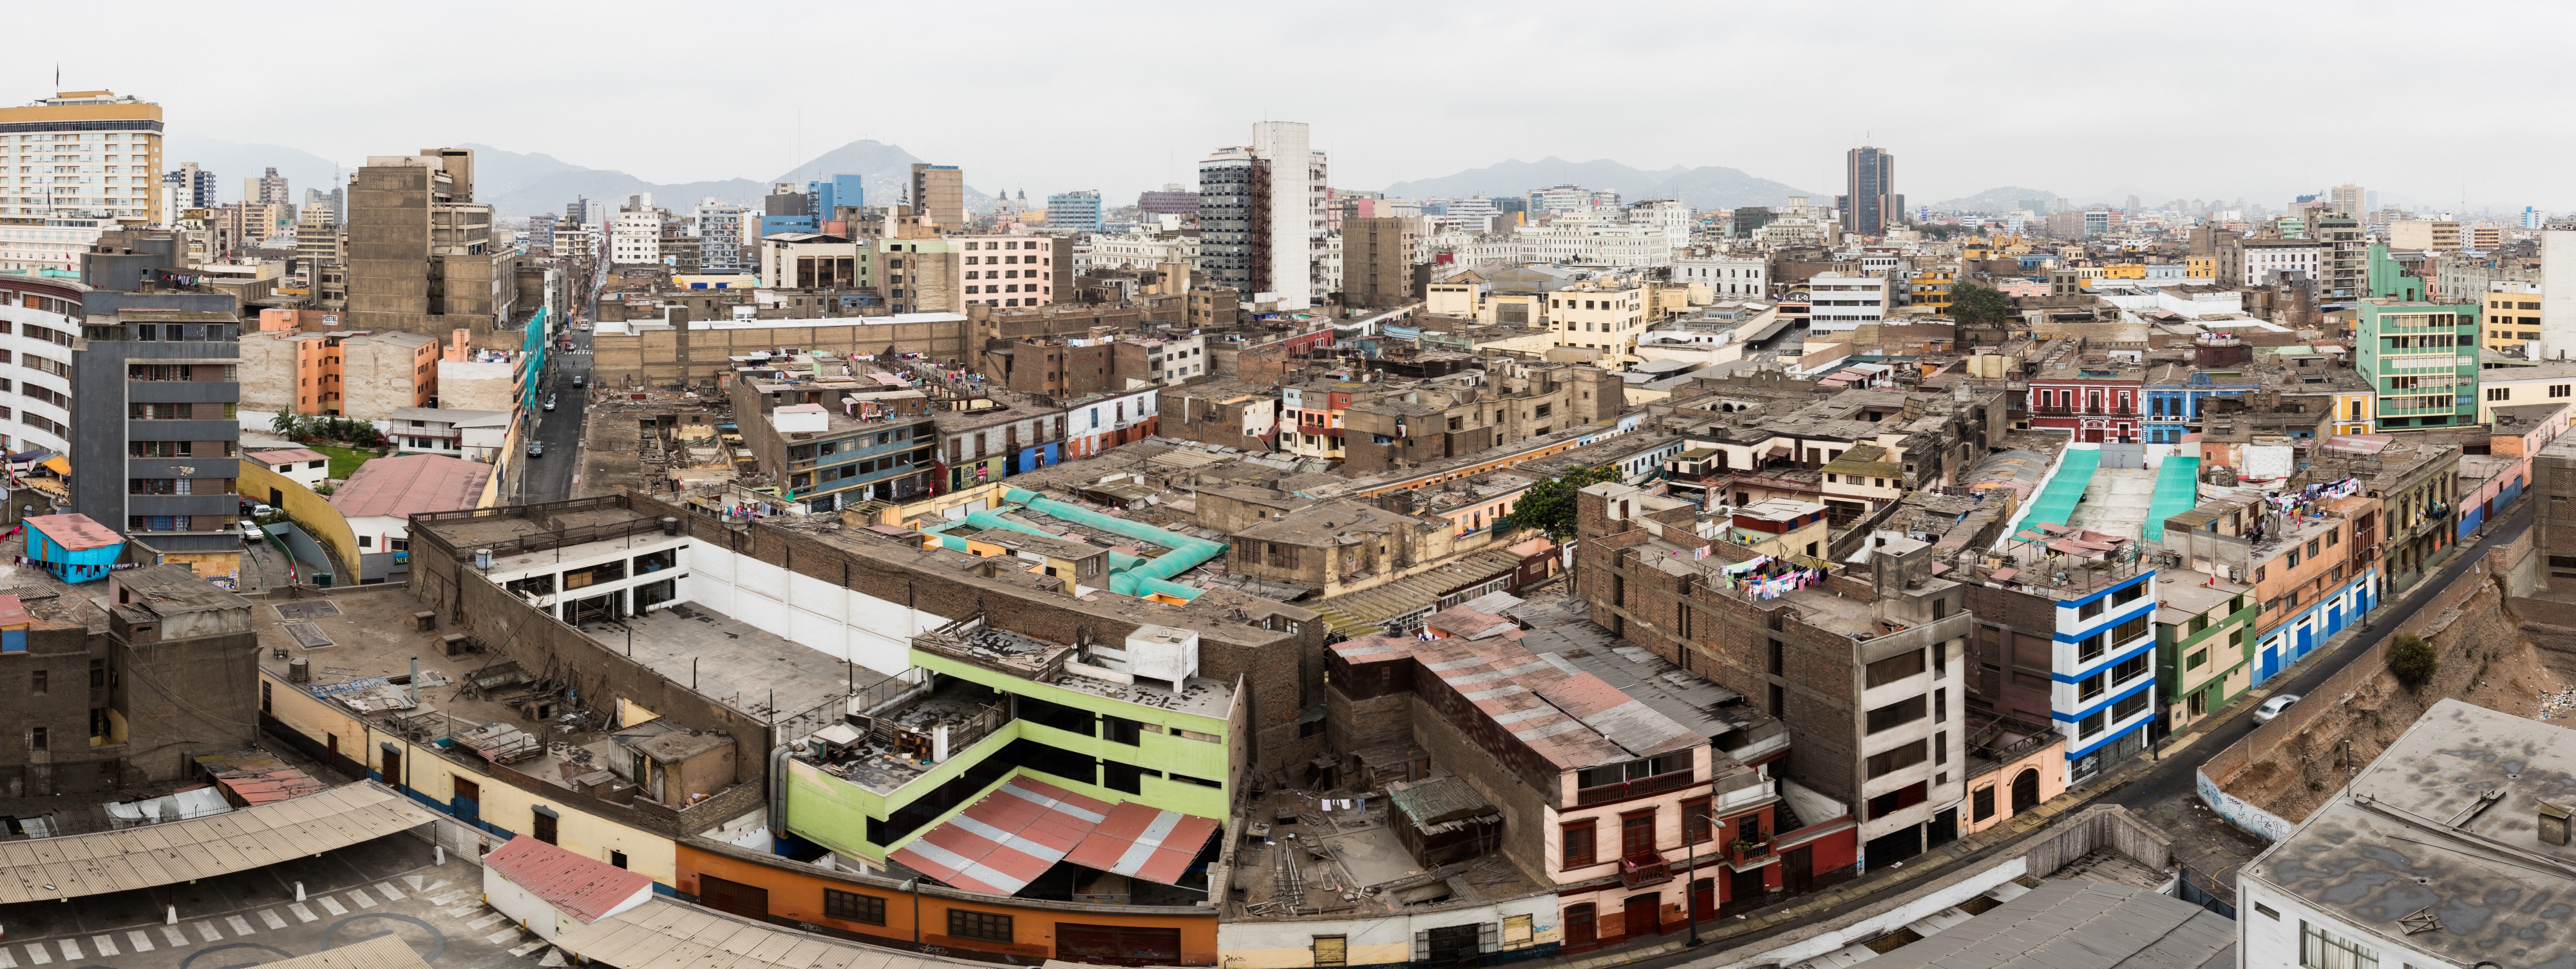 Vista del centro de Lima, Perú, 2015-07-28, DD 04-06 PAN